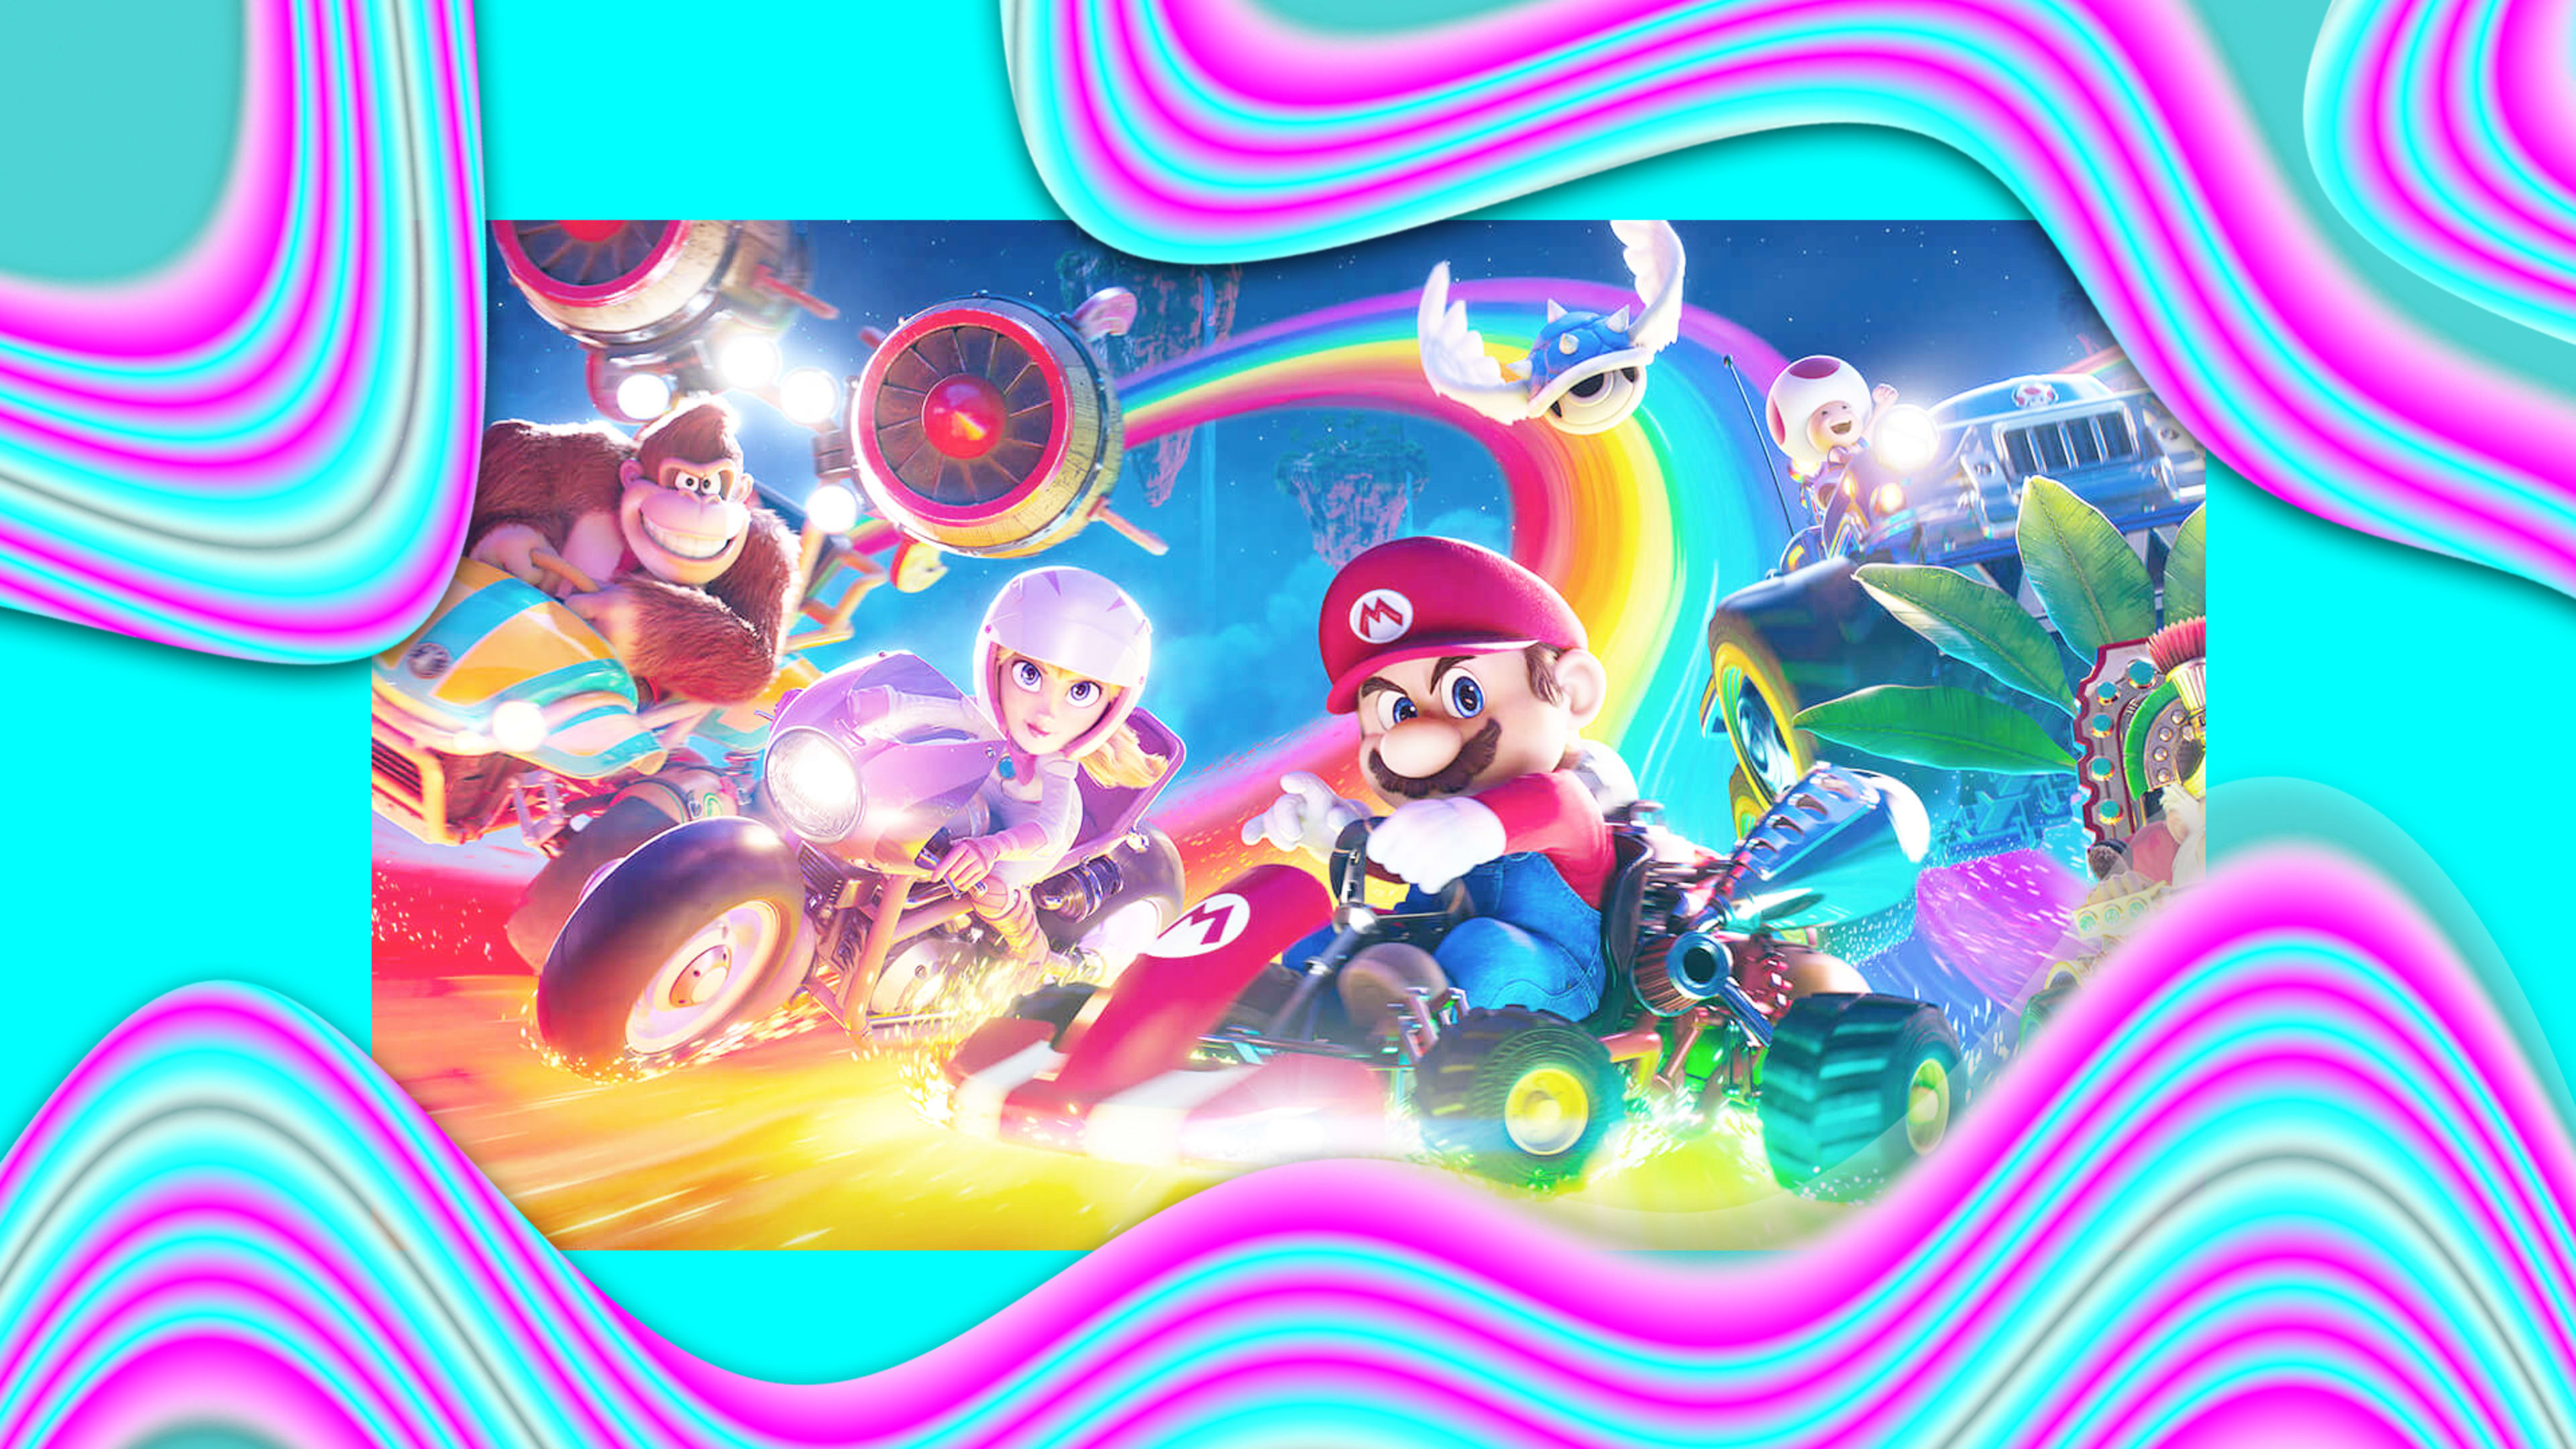 Of course Nintendo’s ‘Super Mario’ movie confounded the critics